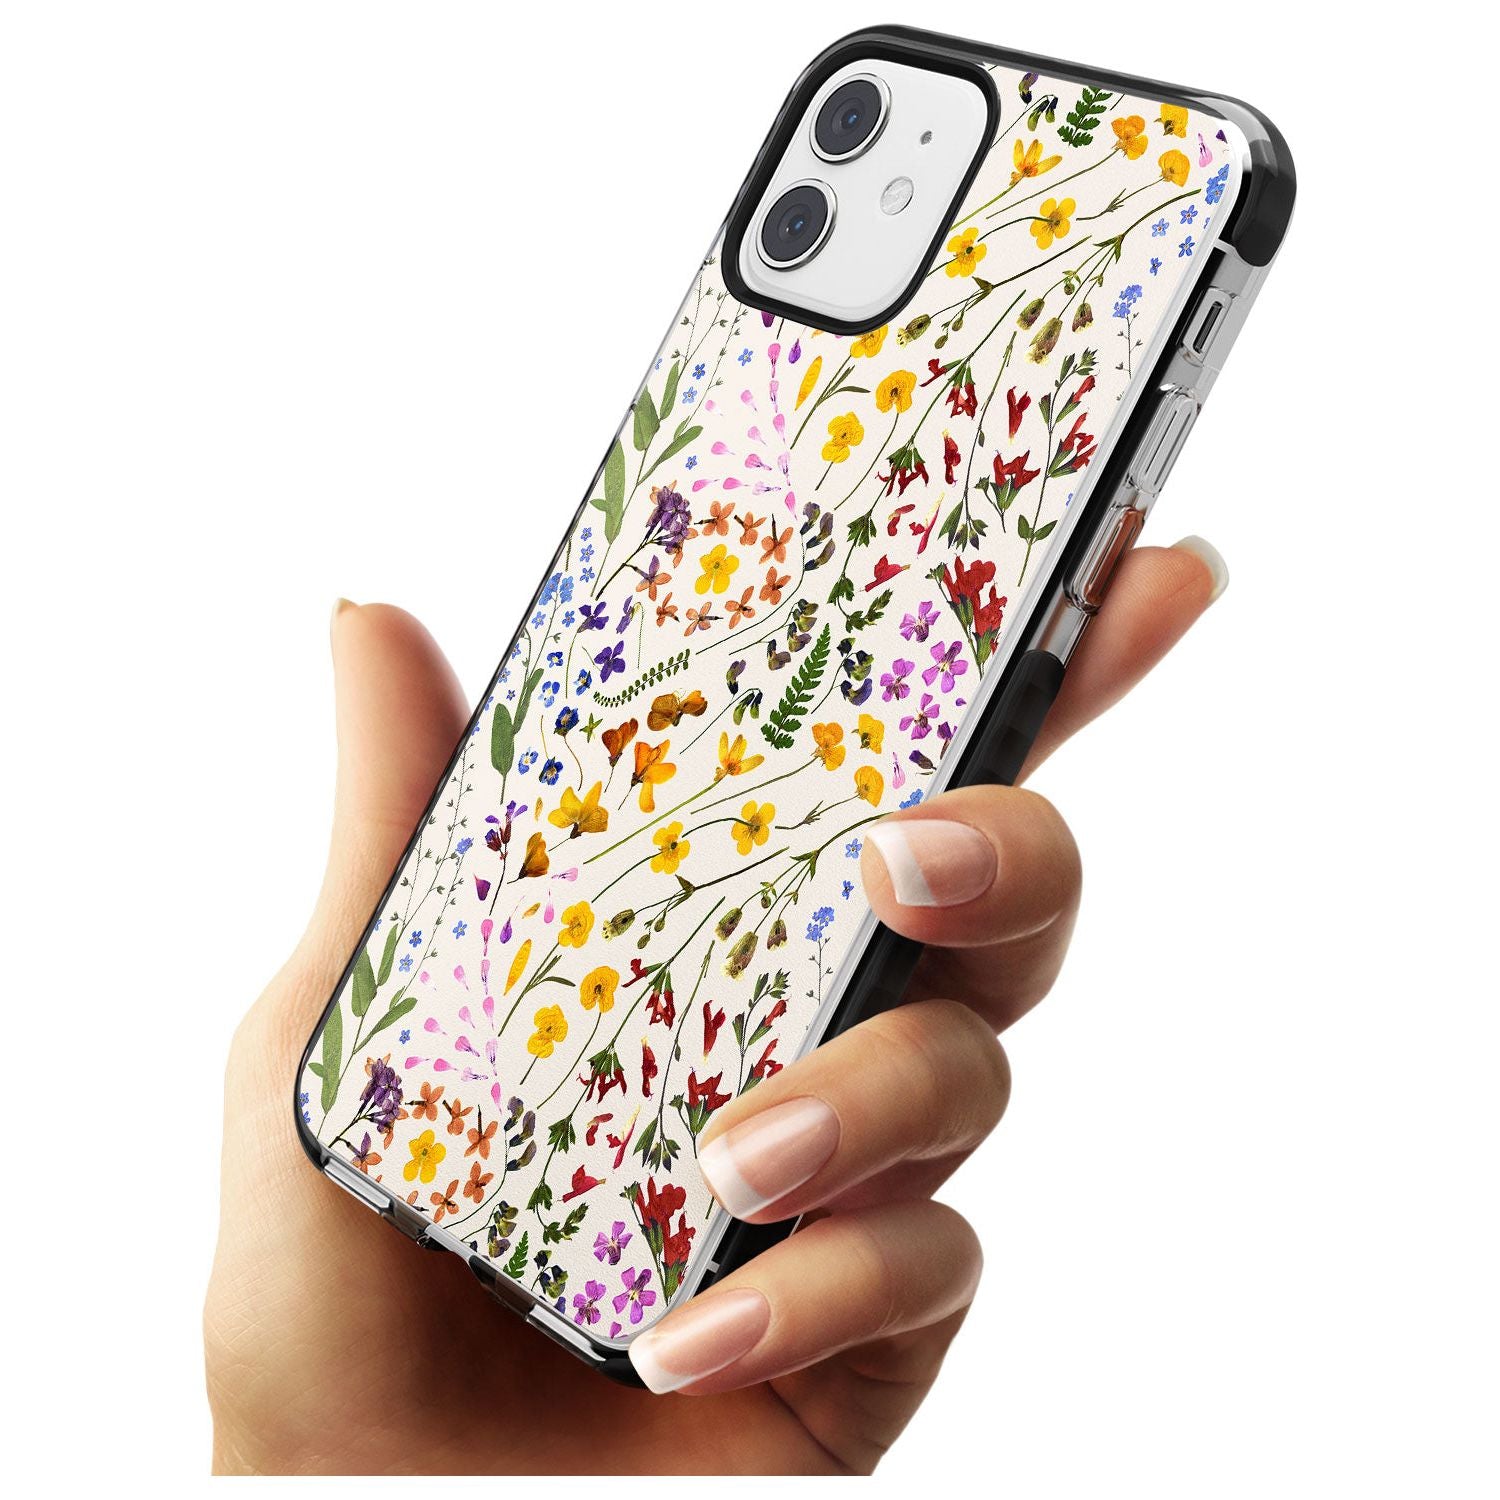 Wildflower & Leaves Cluster Design - Cream Black Impact Phone Case for iPhone 11